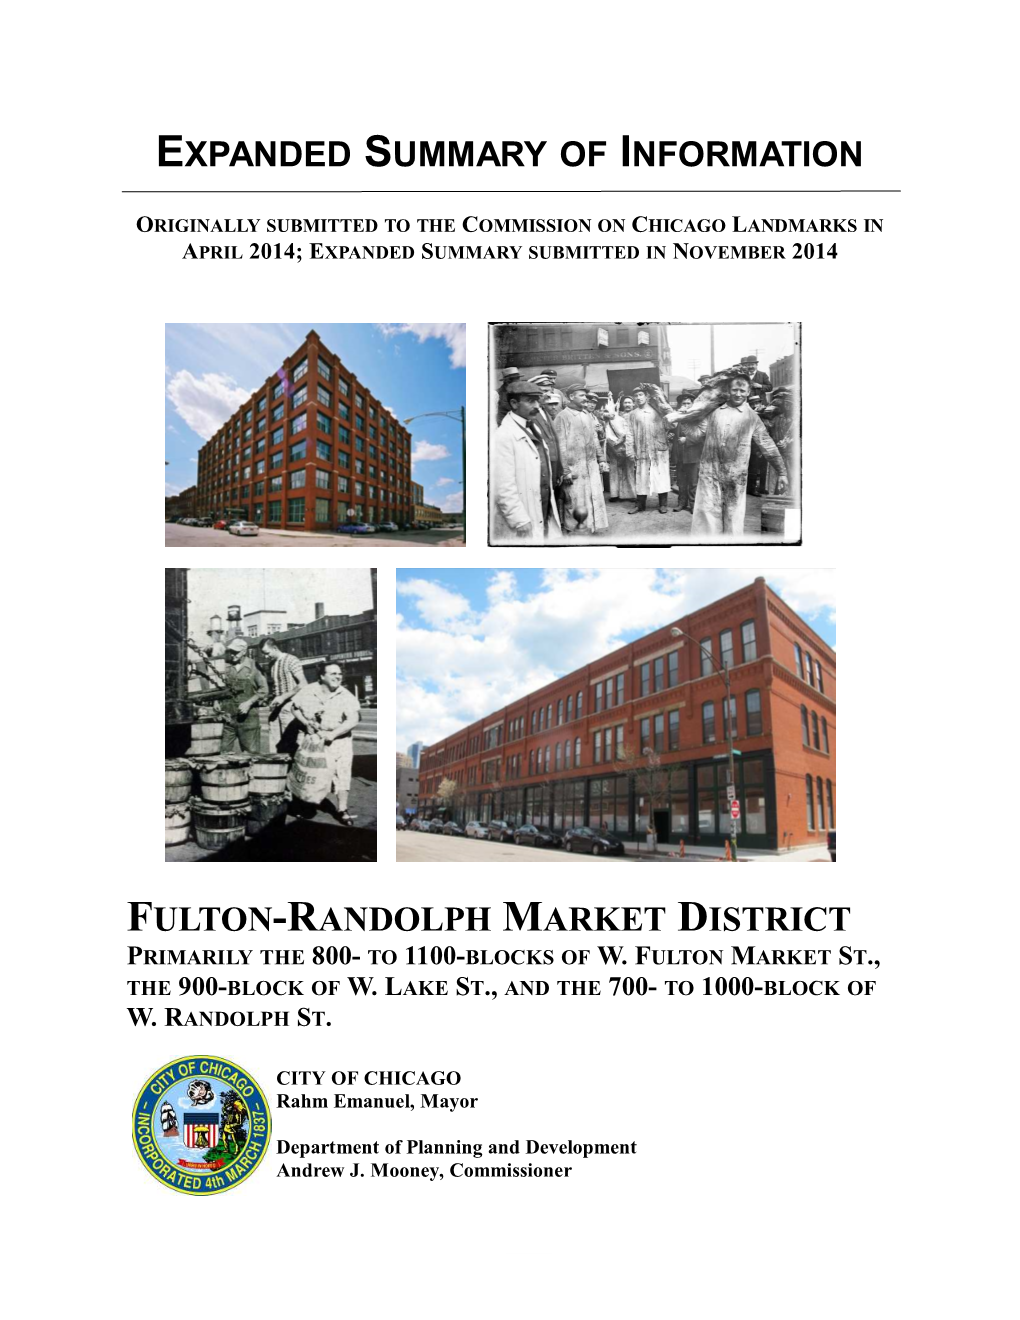 Fulton-Randolph Market District Illustrates Three Historic Contexts of the City’S Past